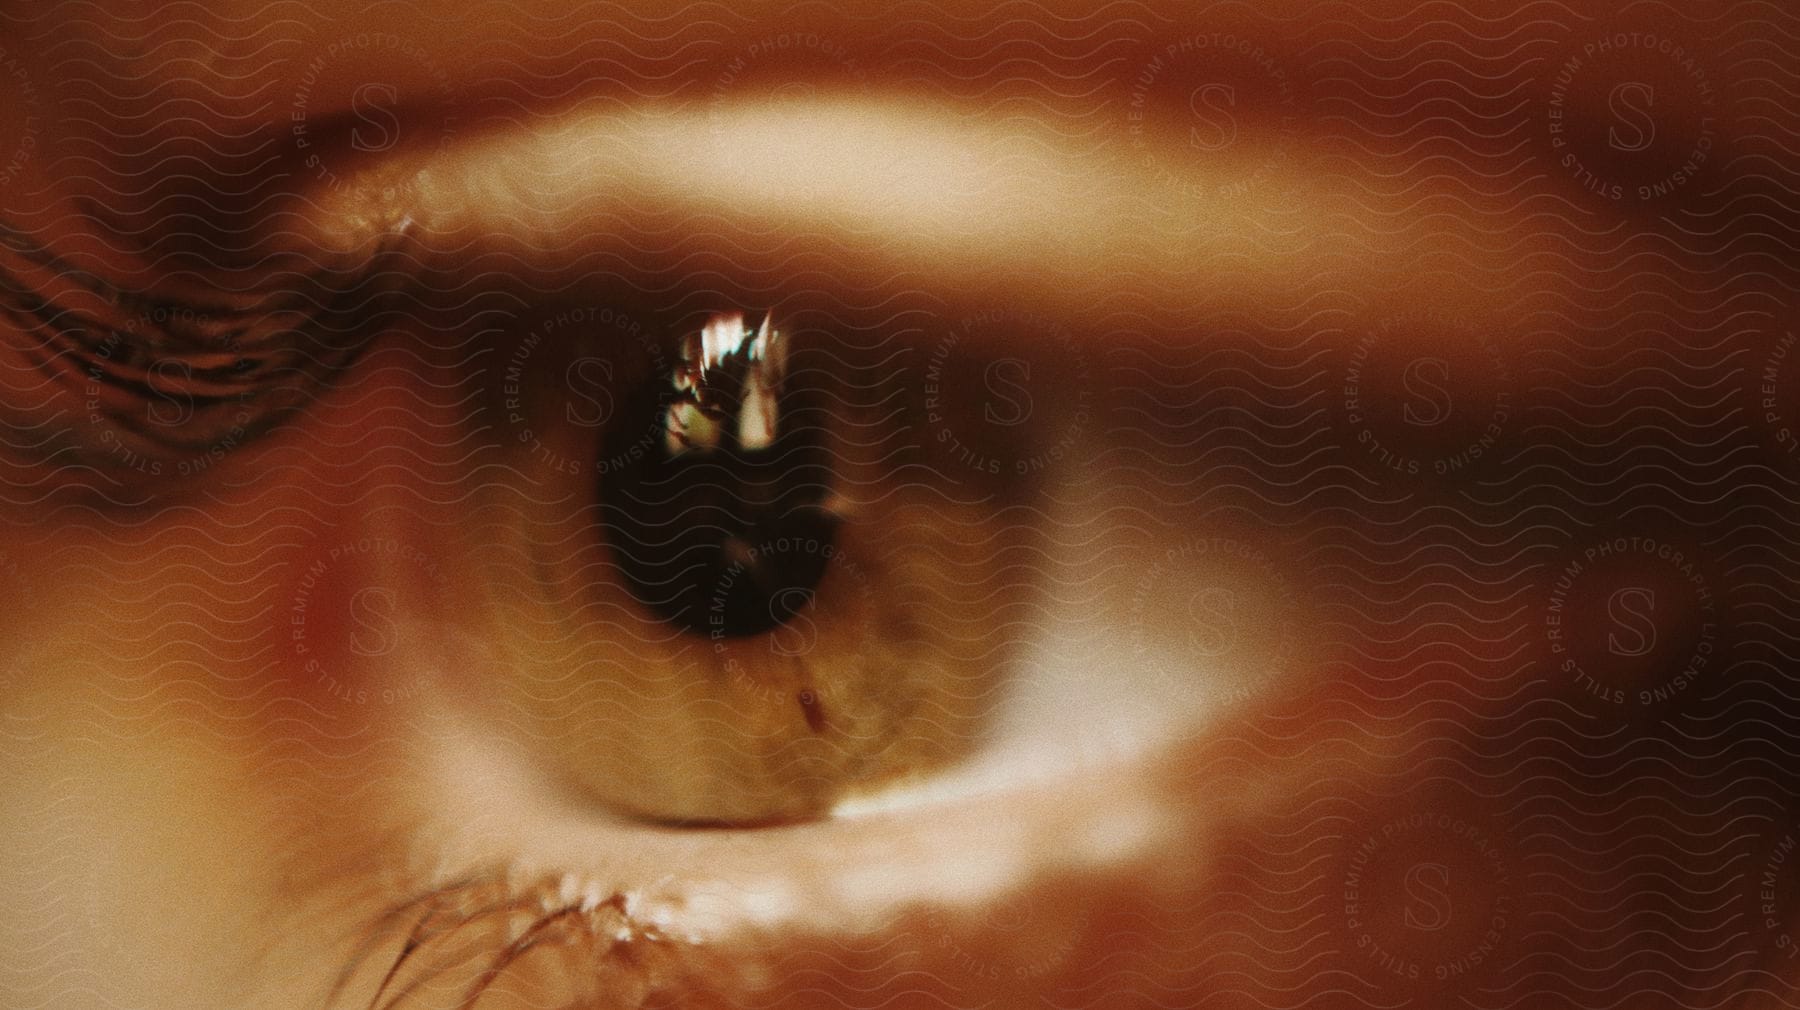 A closeup picture of a human eye showing hidden details